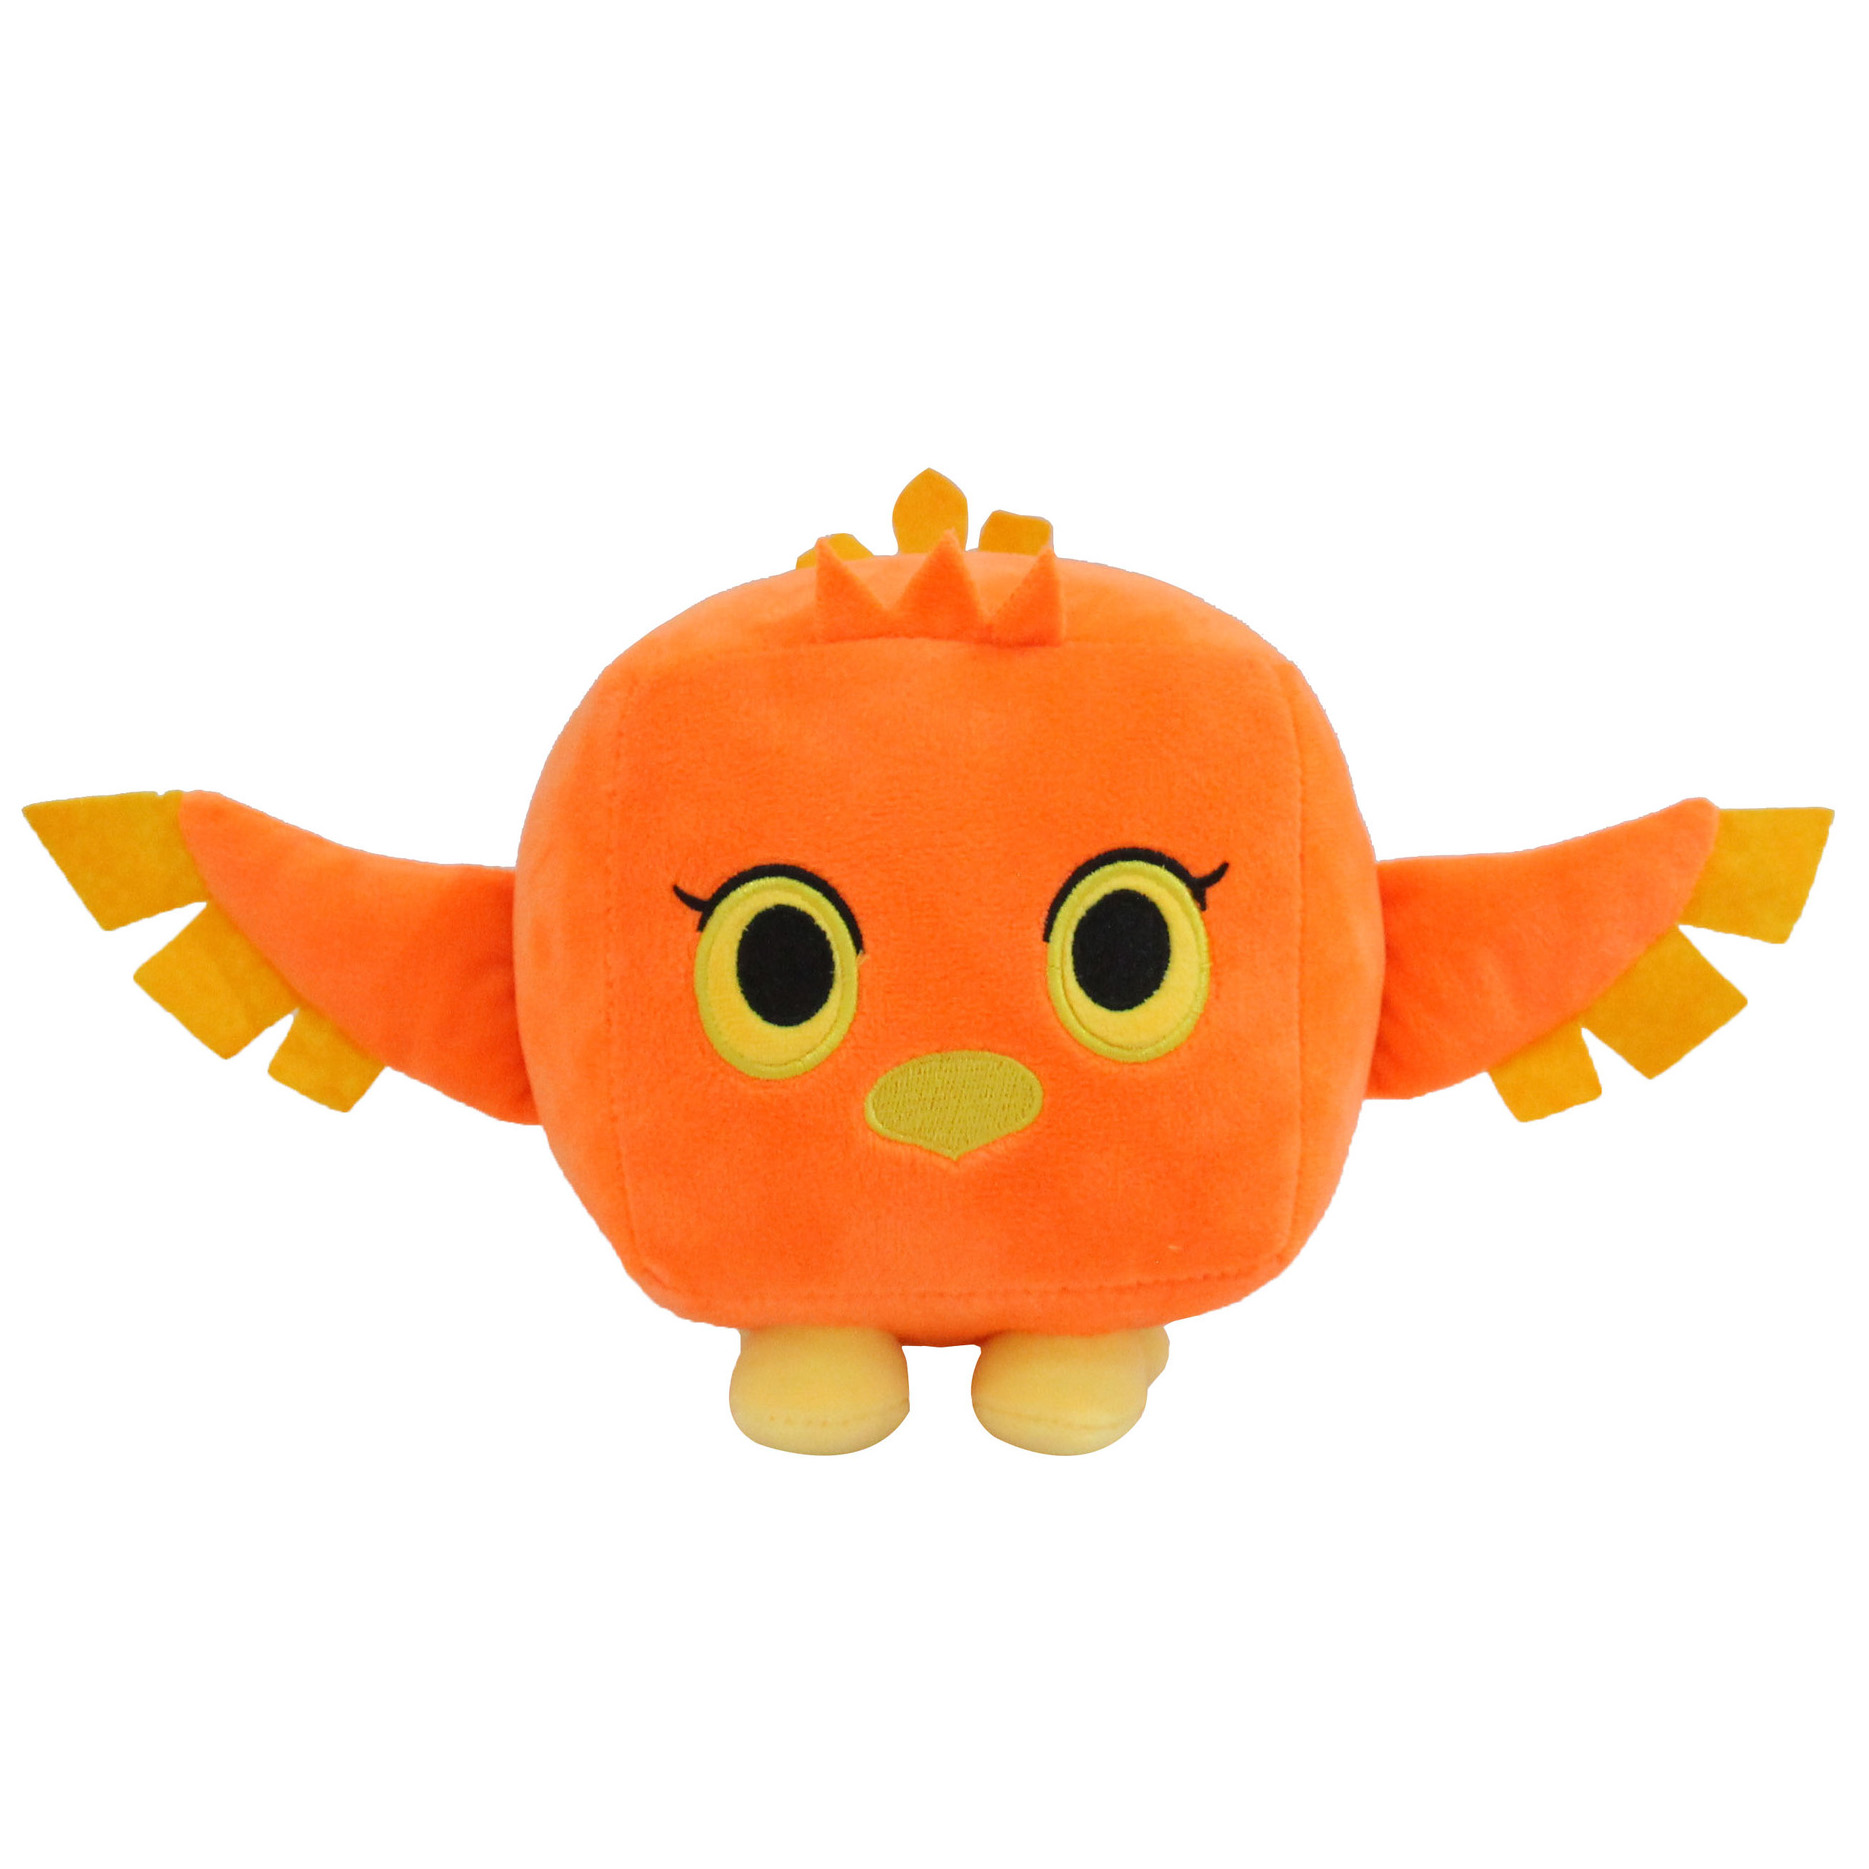 Orange Bird Stuffed Animal Kawaii Cute Soft Toy for Kids and Fans